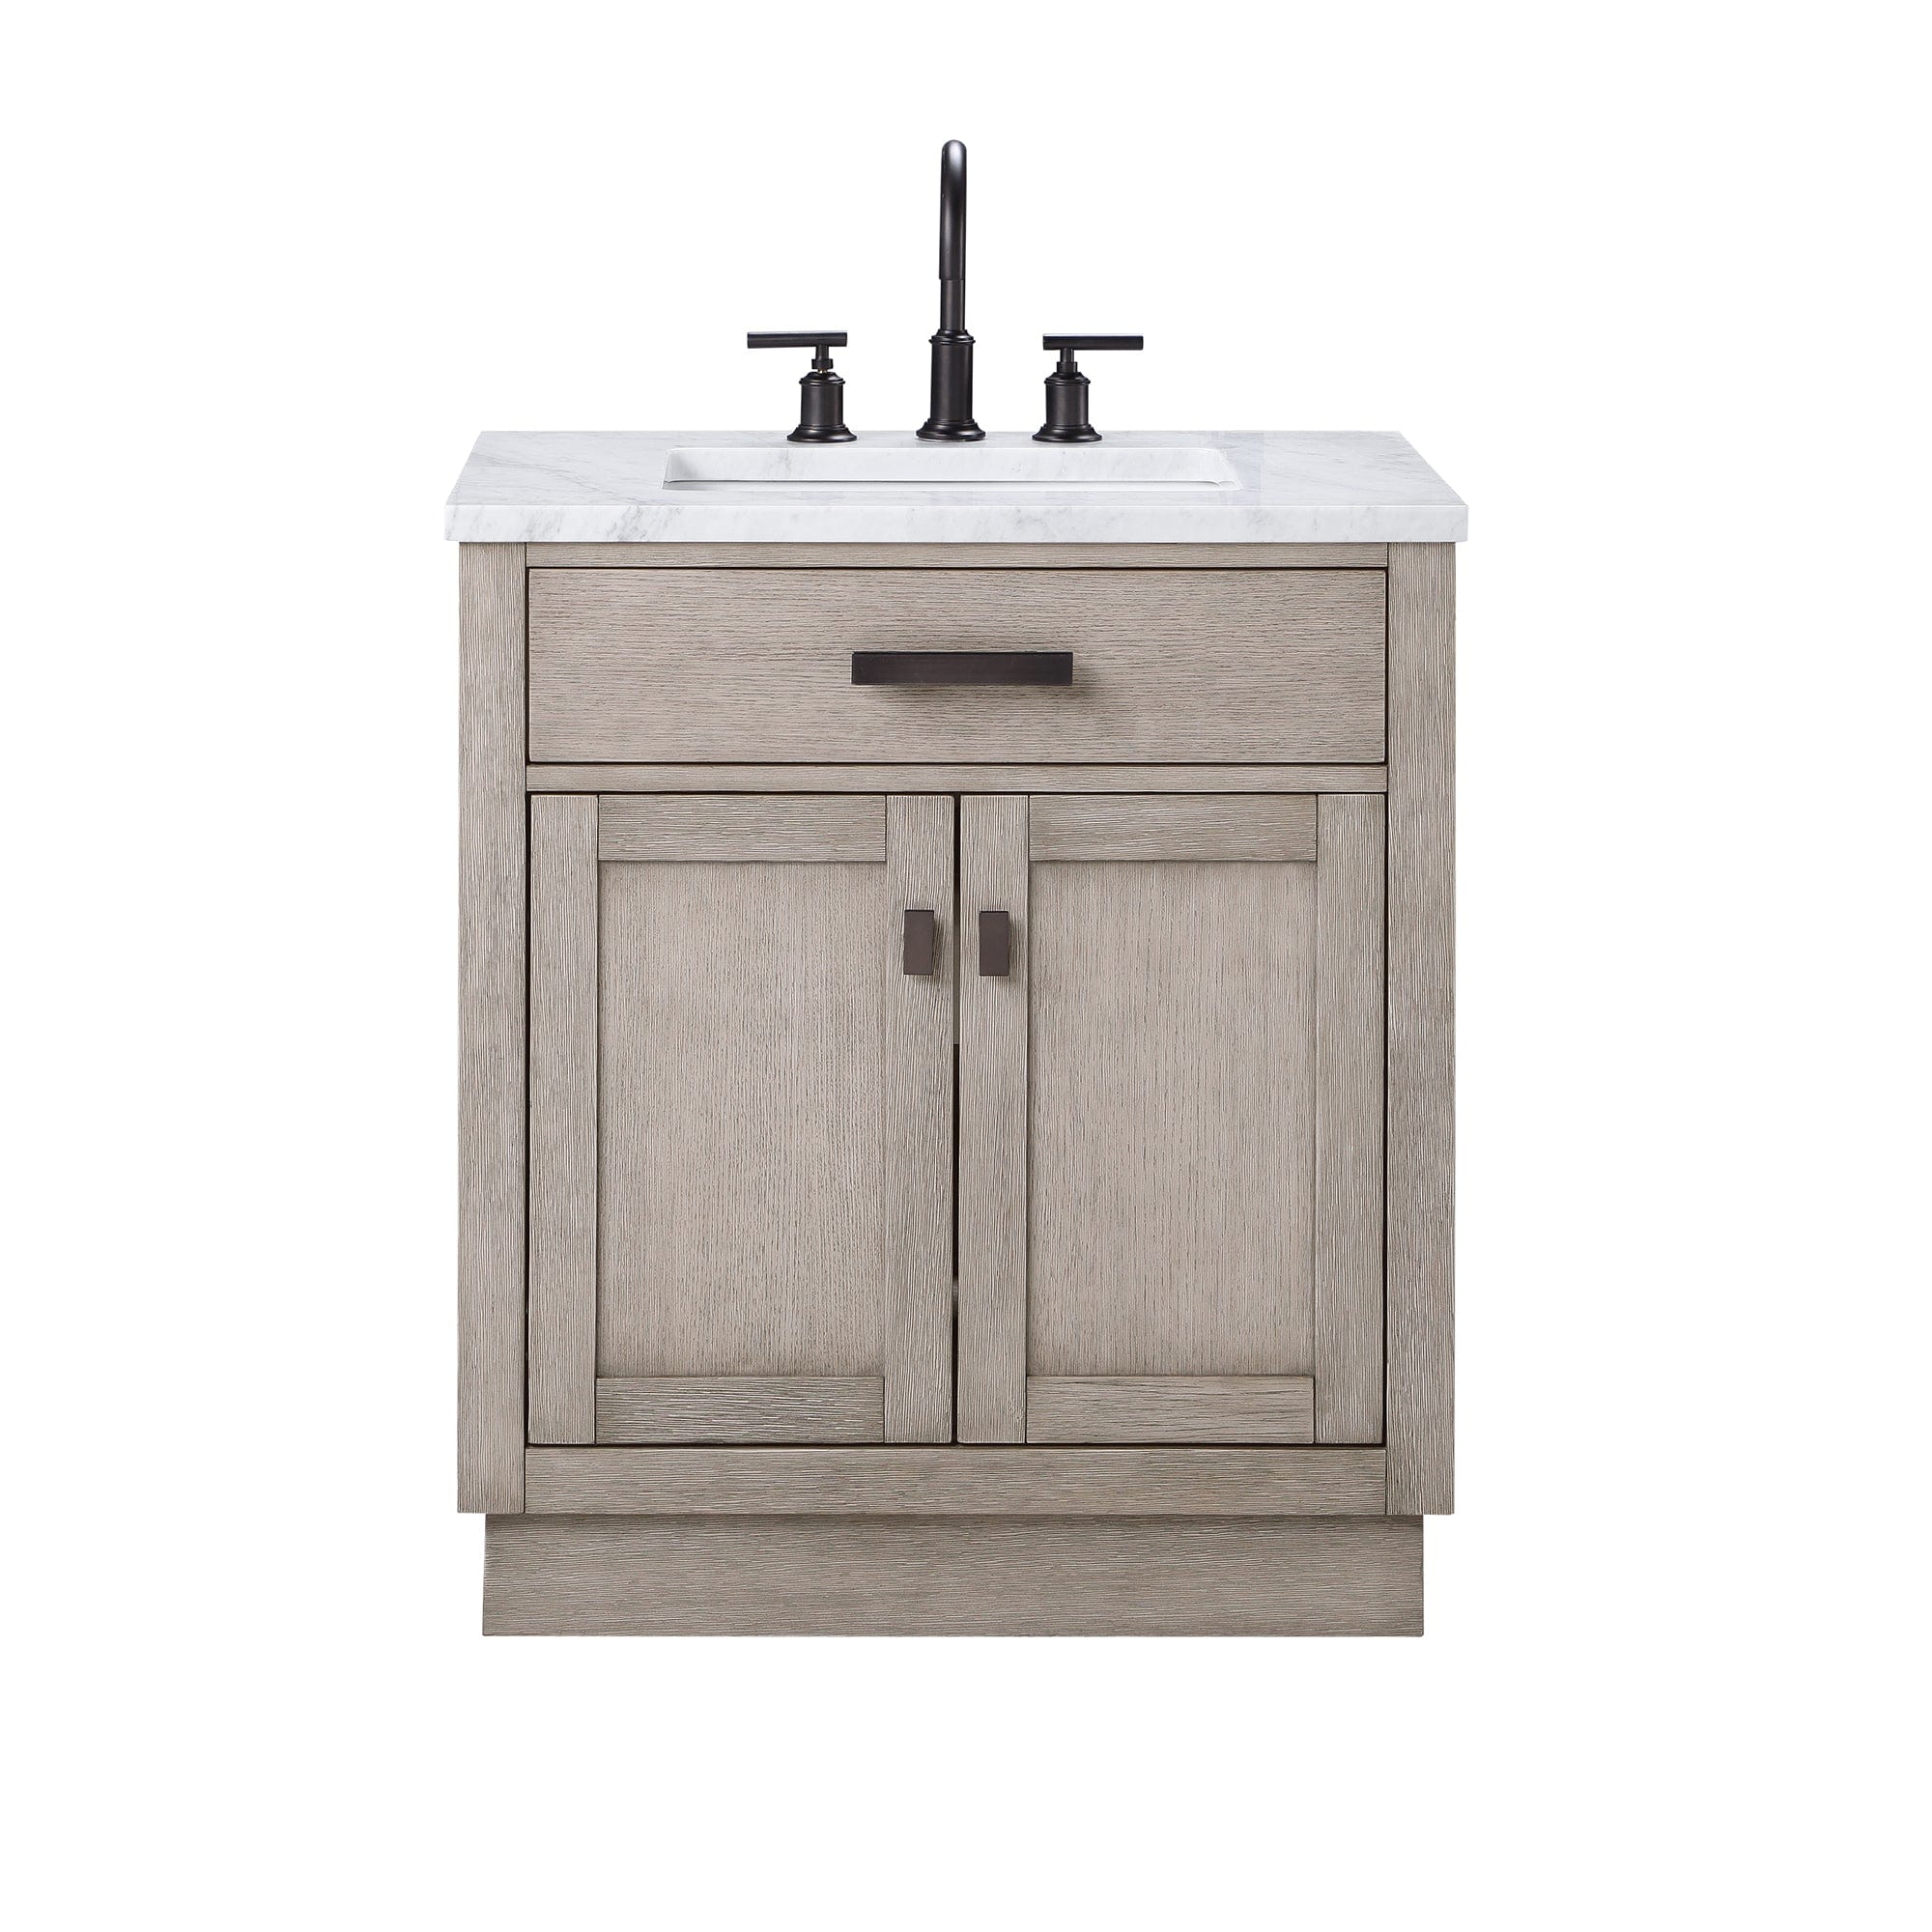 Chestnut 30 In. Single Sink Carrara White Marble Countertop Vanity In Grey Oak - Molaix732030764613CH30CW03GK-000000000